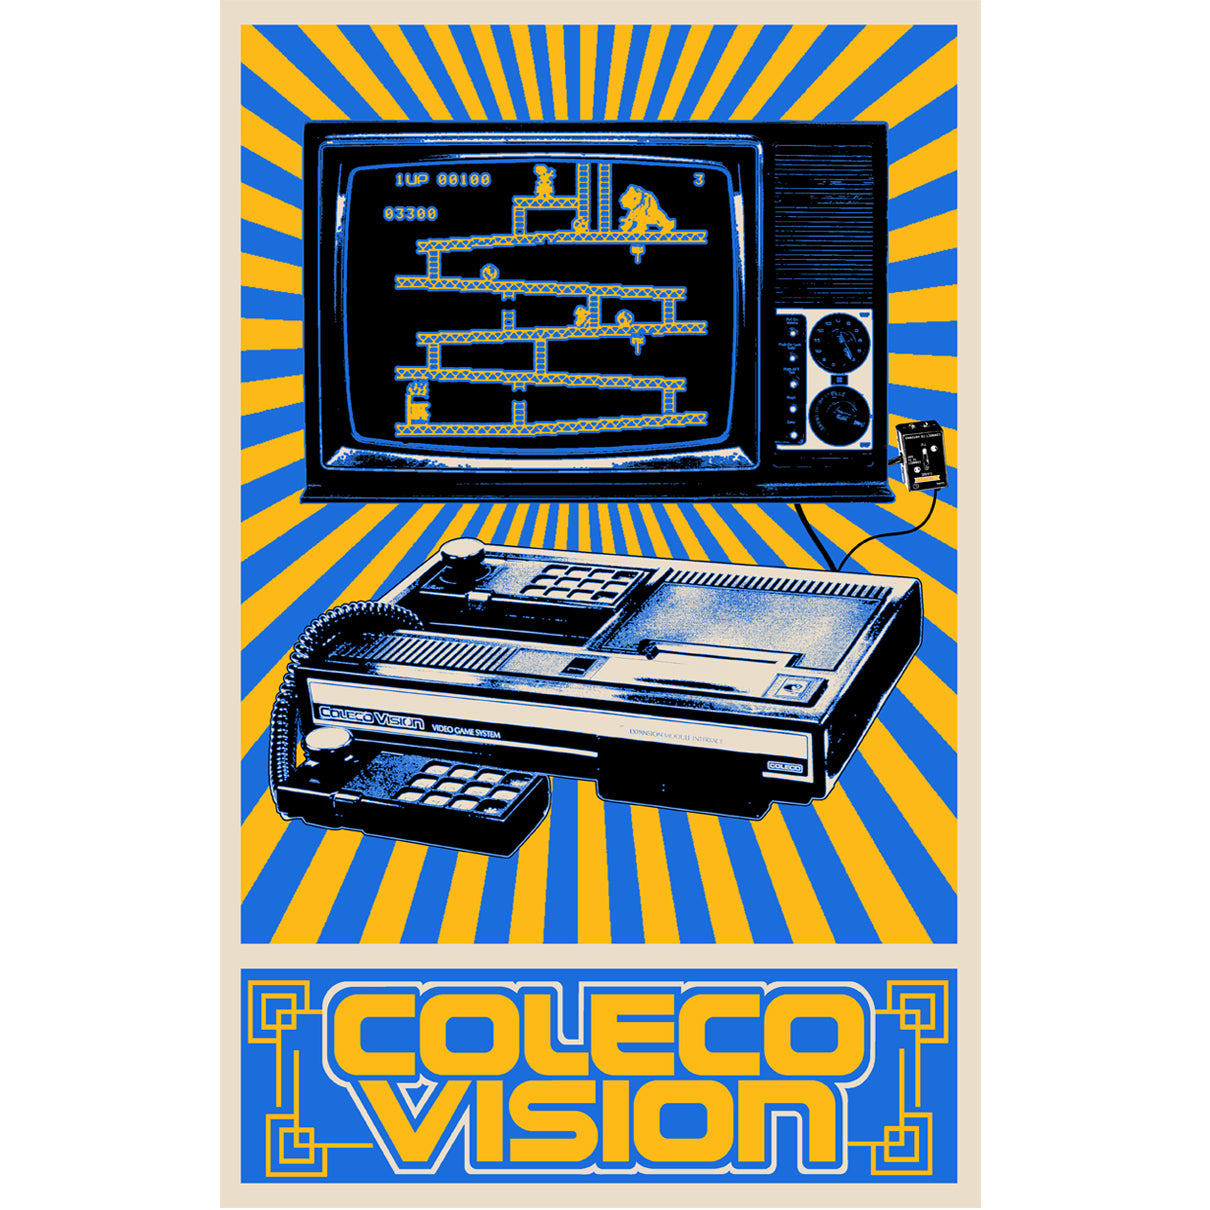 Colecovision retro video game console poster art print 11x17